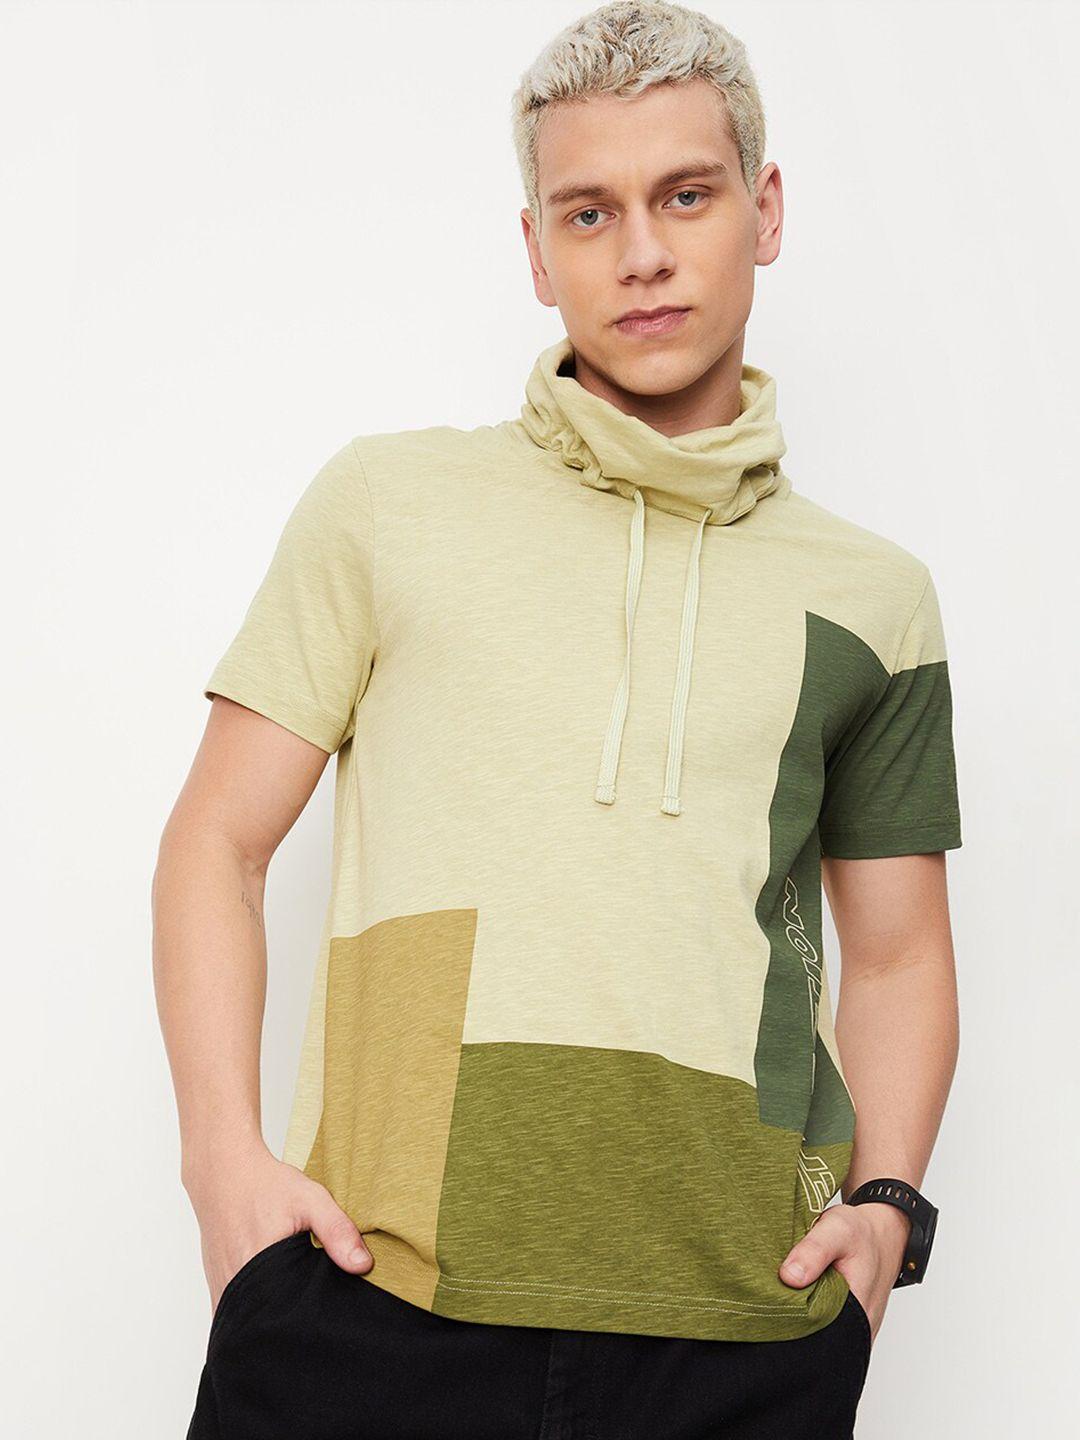 max colourblocked turtle neck pure cotton t-shirt